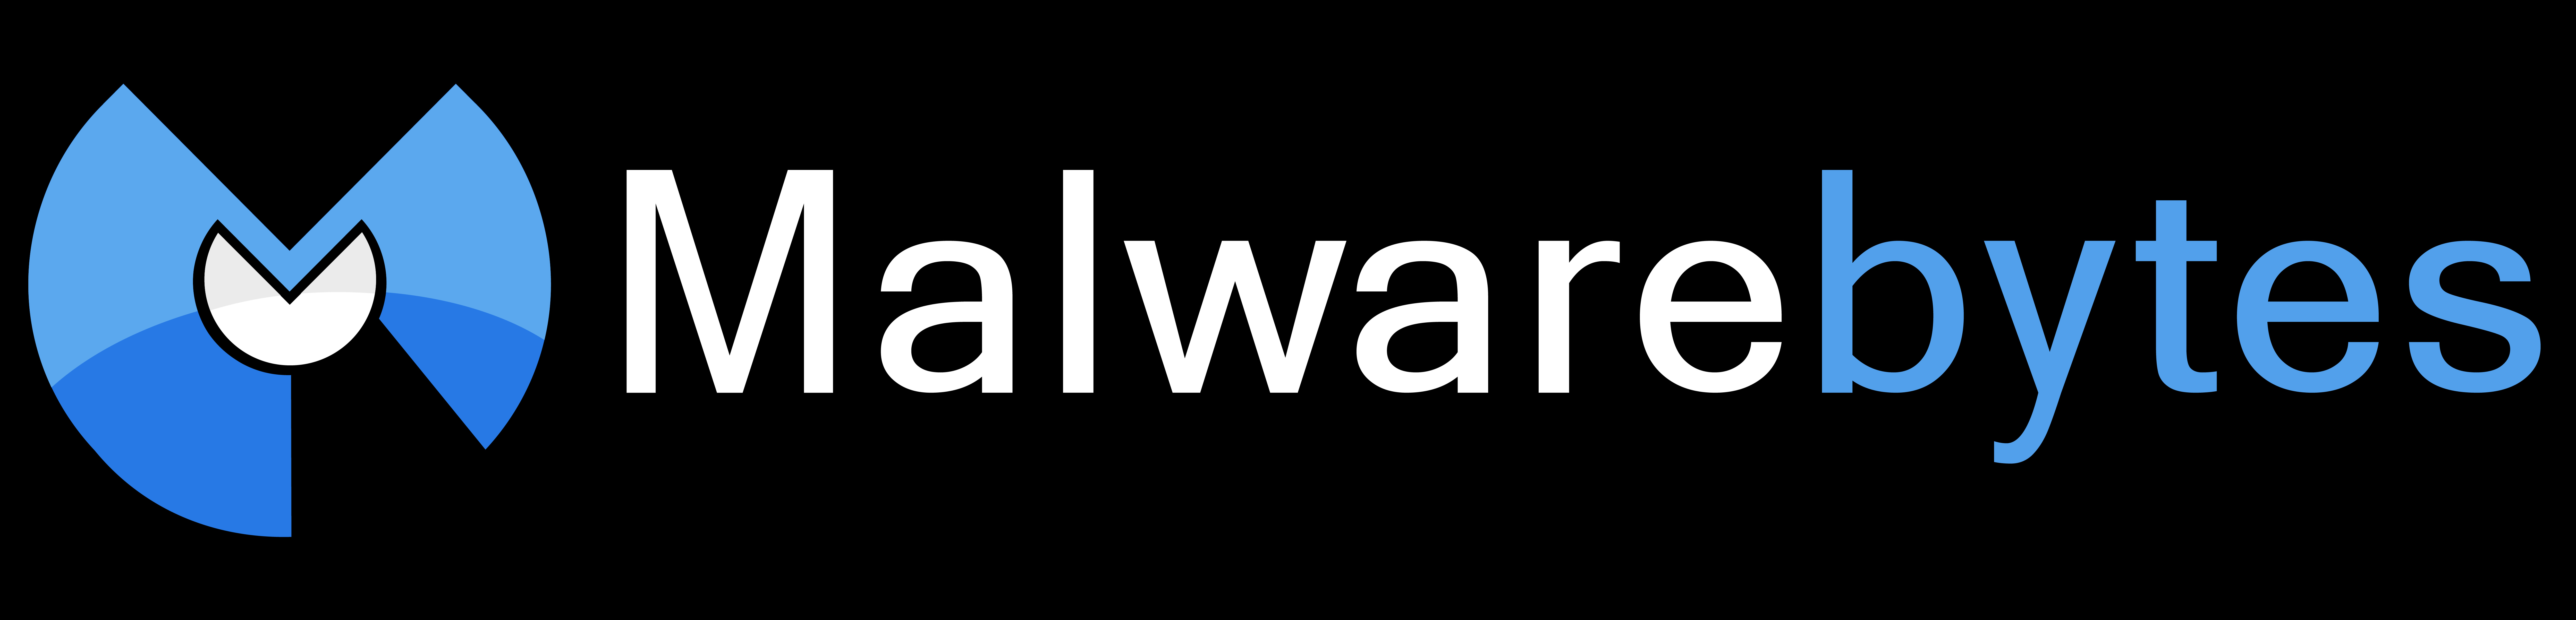 malwarebytes anti malware free download for windows vista